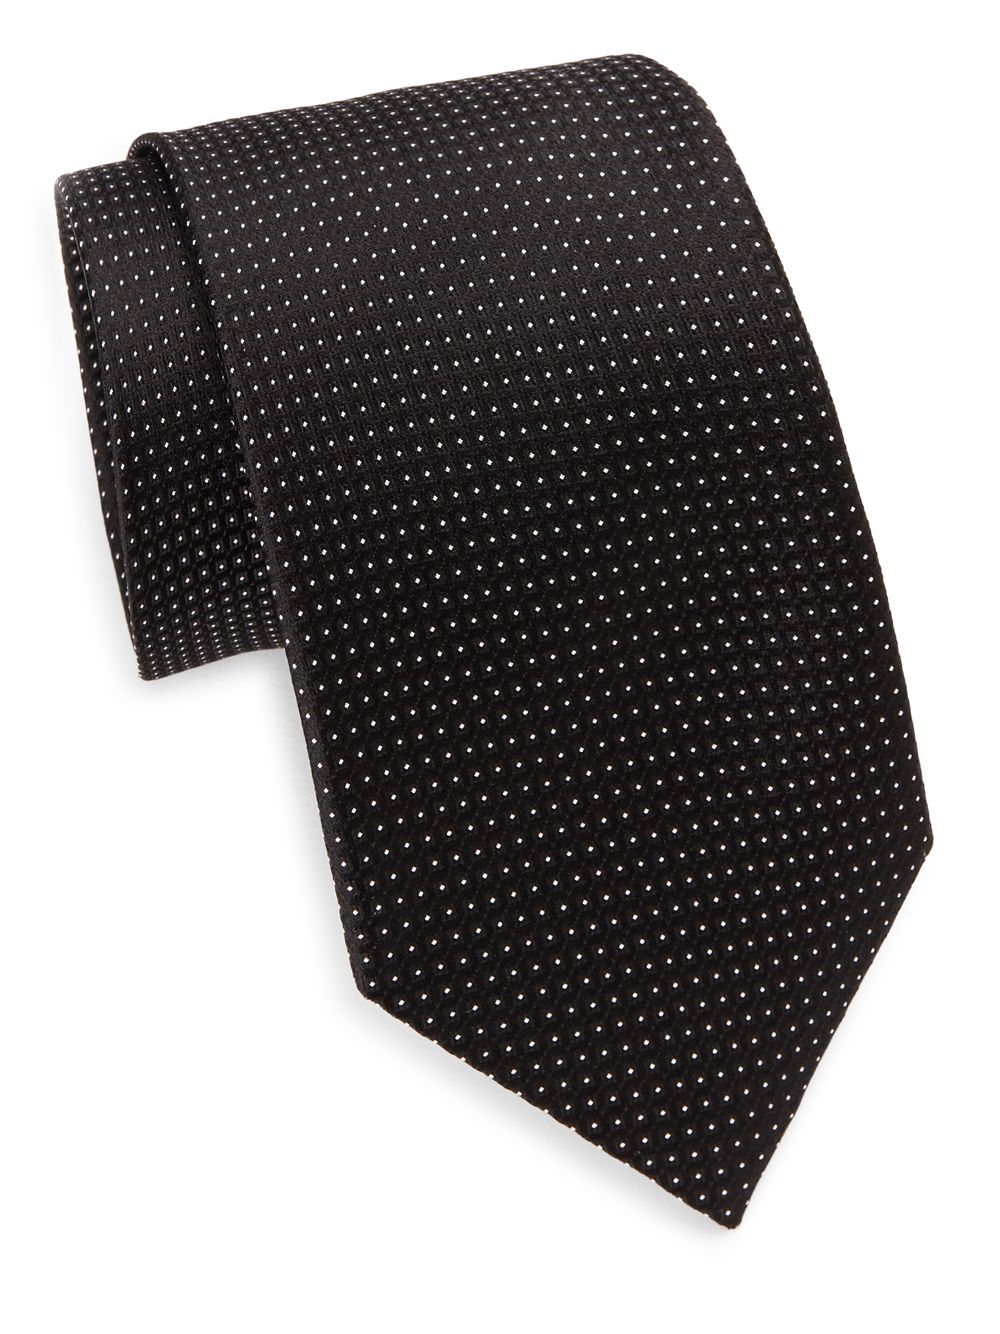 Lyst - Saks Fifth Avenue Pindot Silk Tie & Gift Box in Black for Men